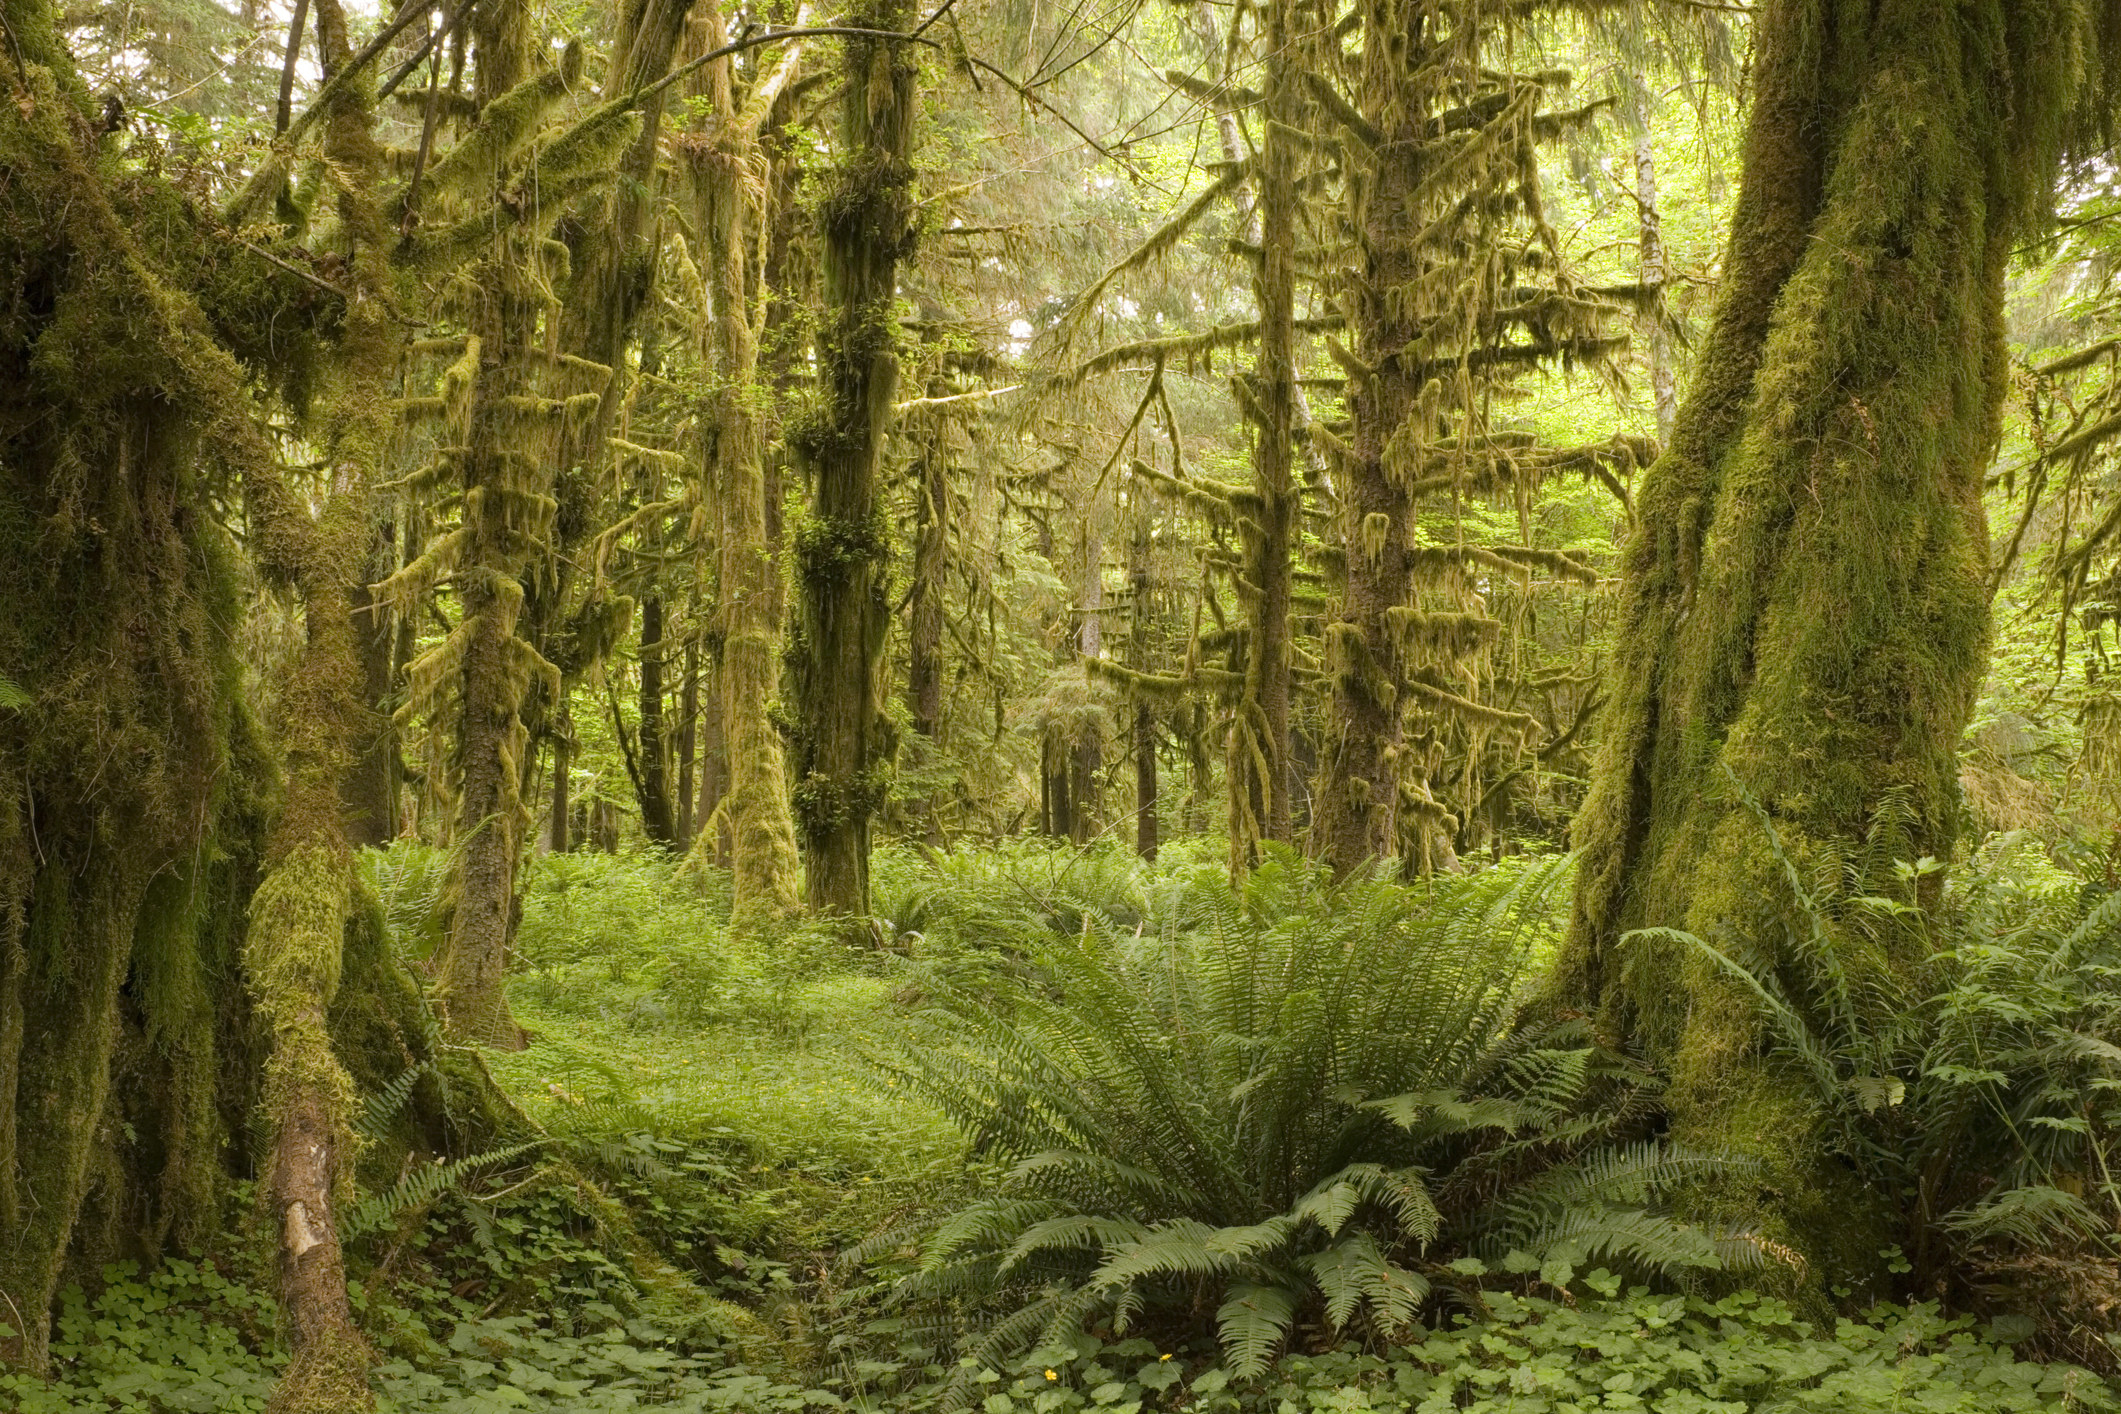 Moss-covered rainforest in Olympic Peninsula, Washington